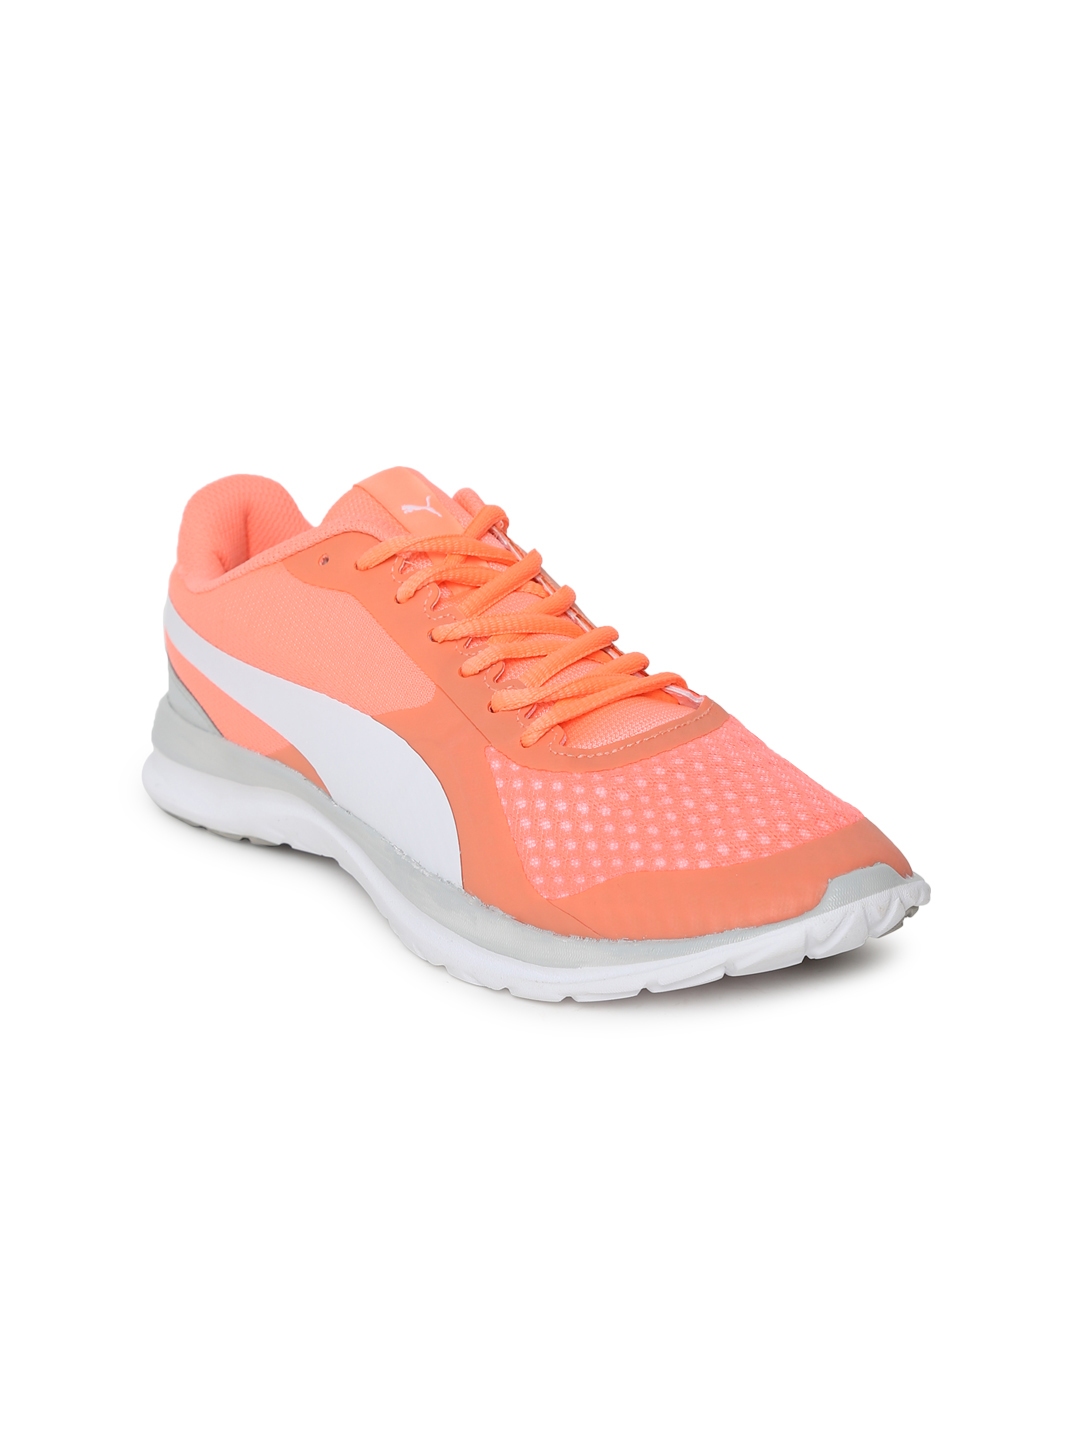 Buy Puma Women Peach Coloured FlexT1 IDP Running Shoes - Sports Shoes ...